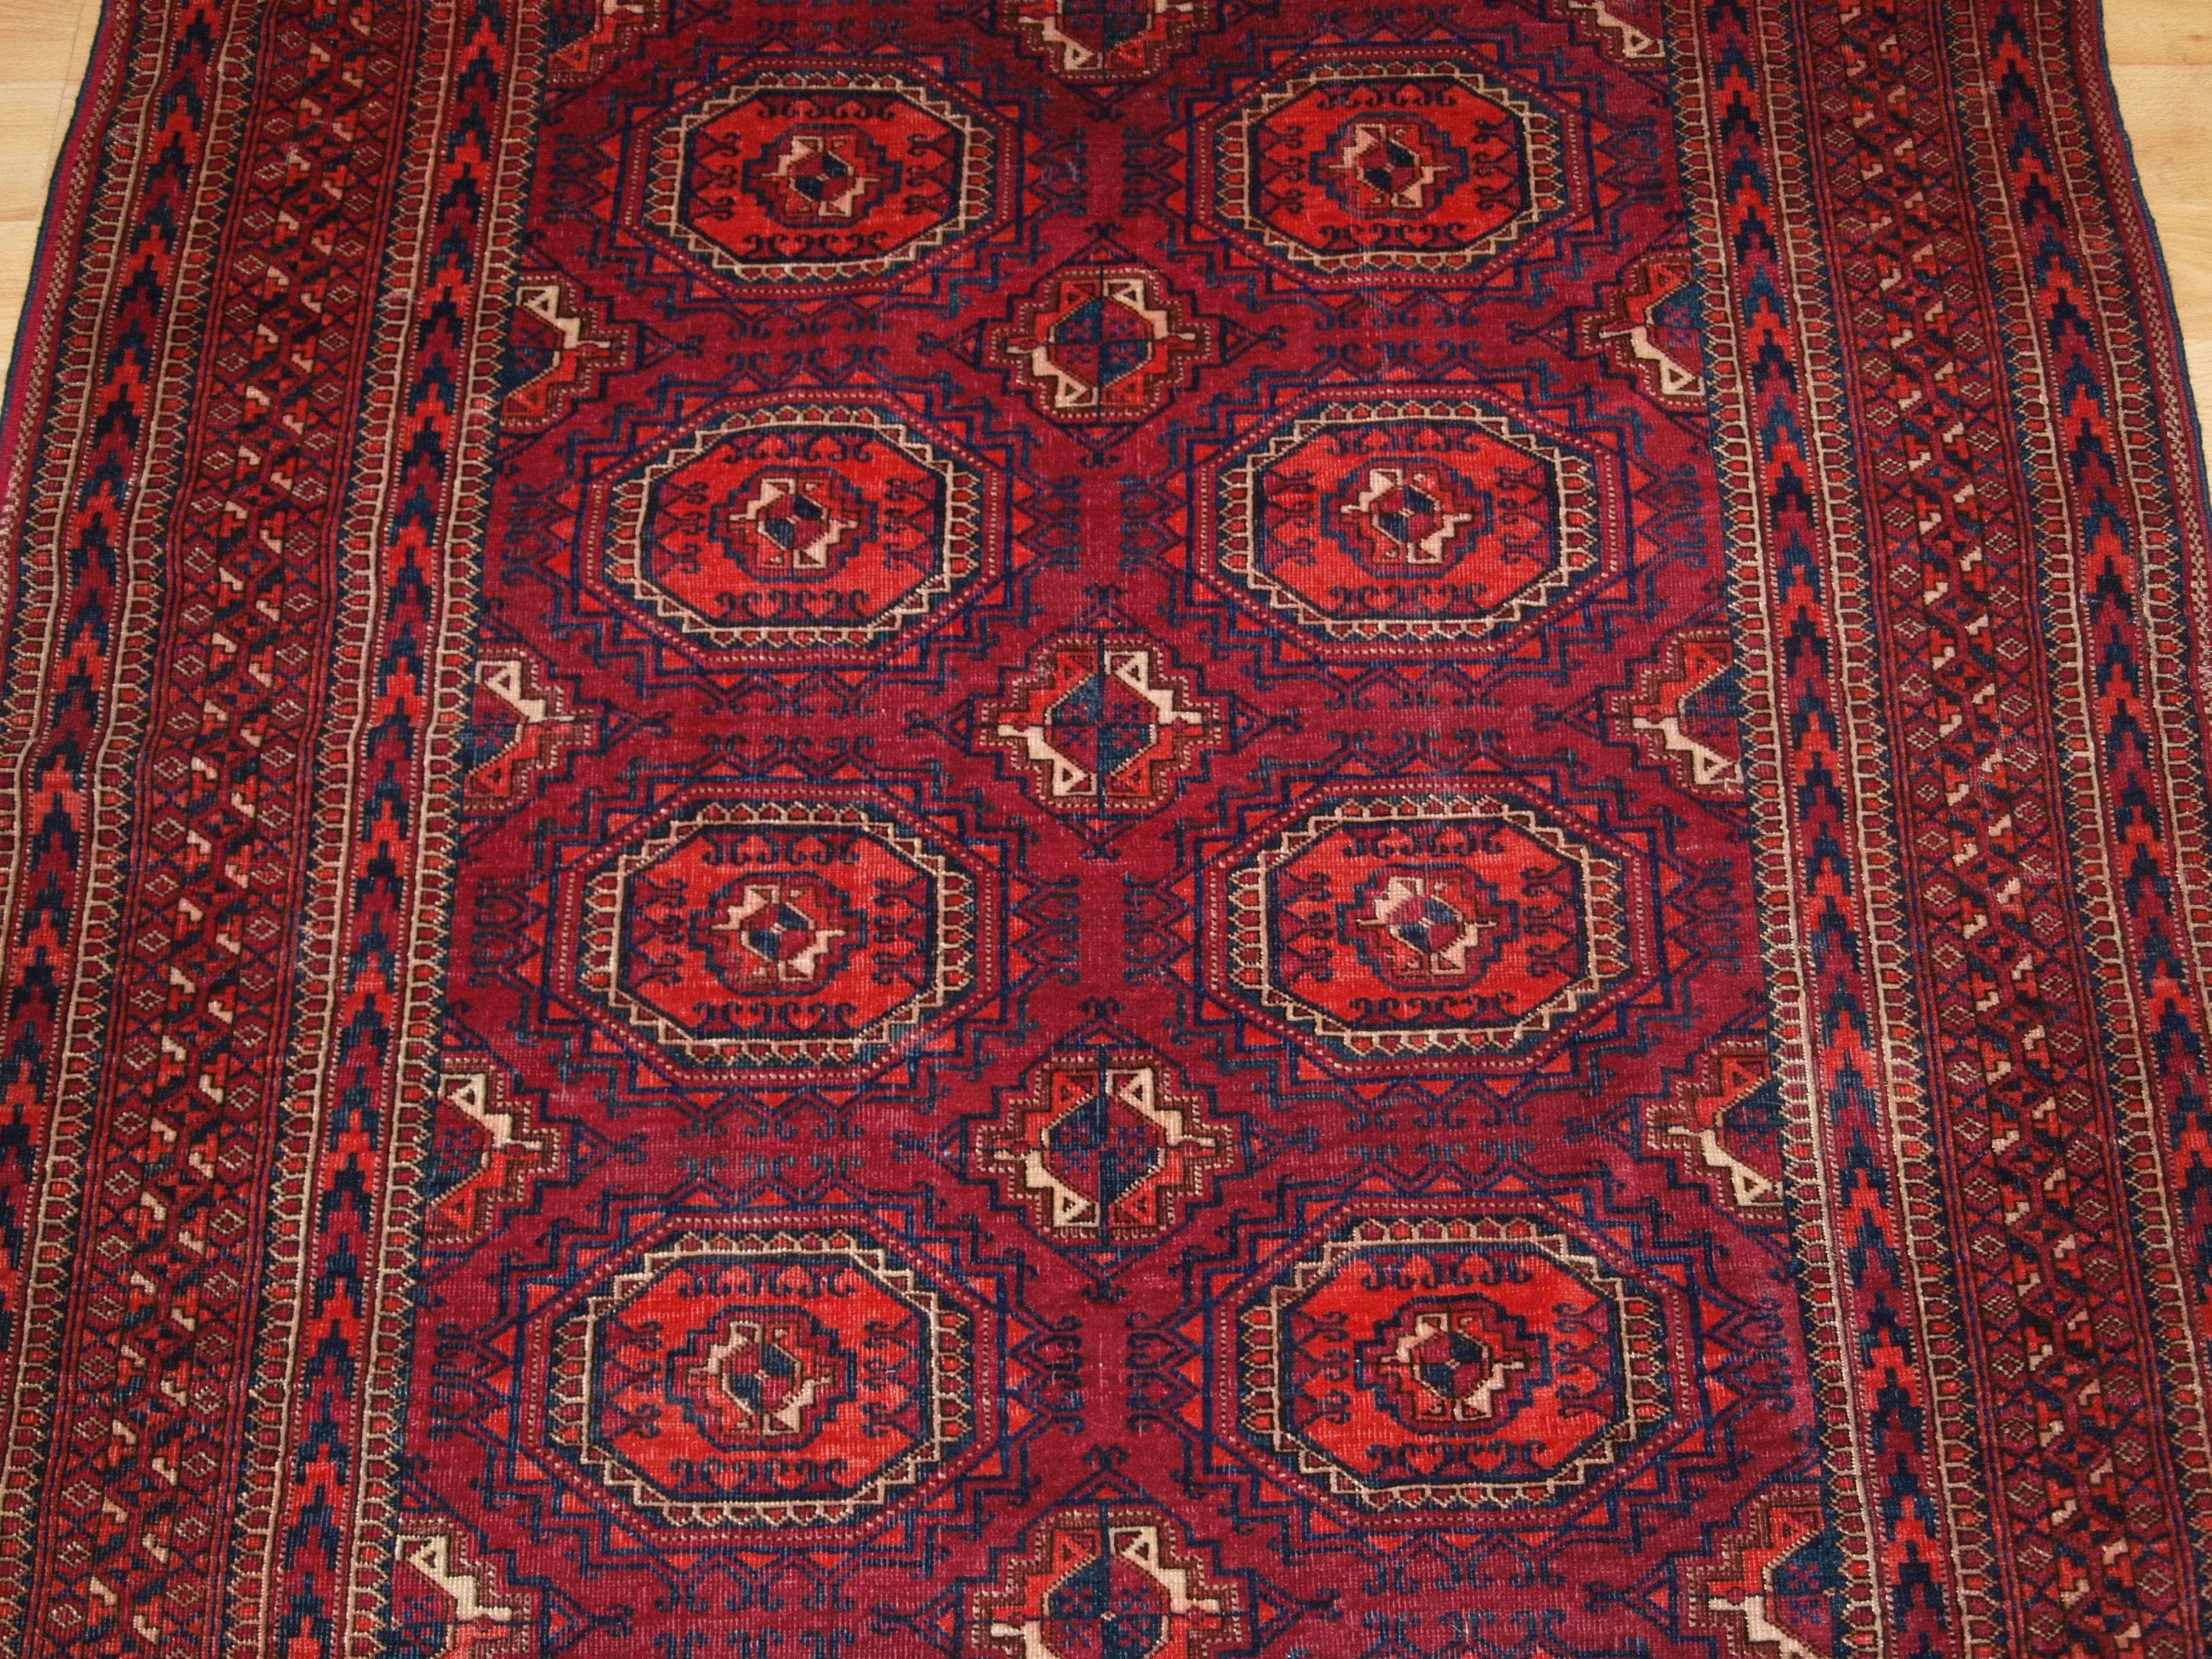 Antique Tekke Turkmen rug, salor turreted guls, fine weave, cochineal dye, circa 1890.
Size: 6ft 0in x 3ft 11in (183 x 120cm).

Antique Tekke Turkmen rug of small size, with fine weave, superb Cochineal color.

circa 1890.

This is an good